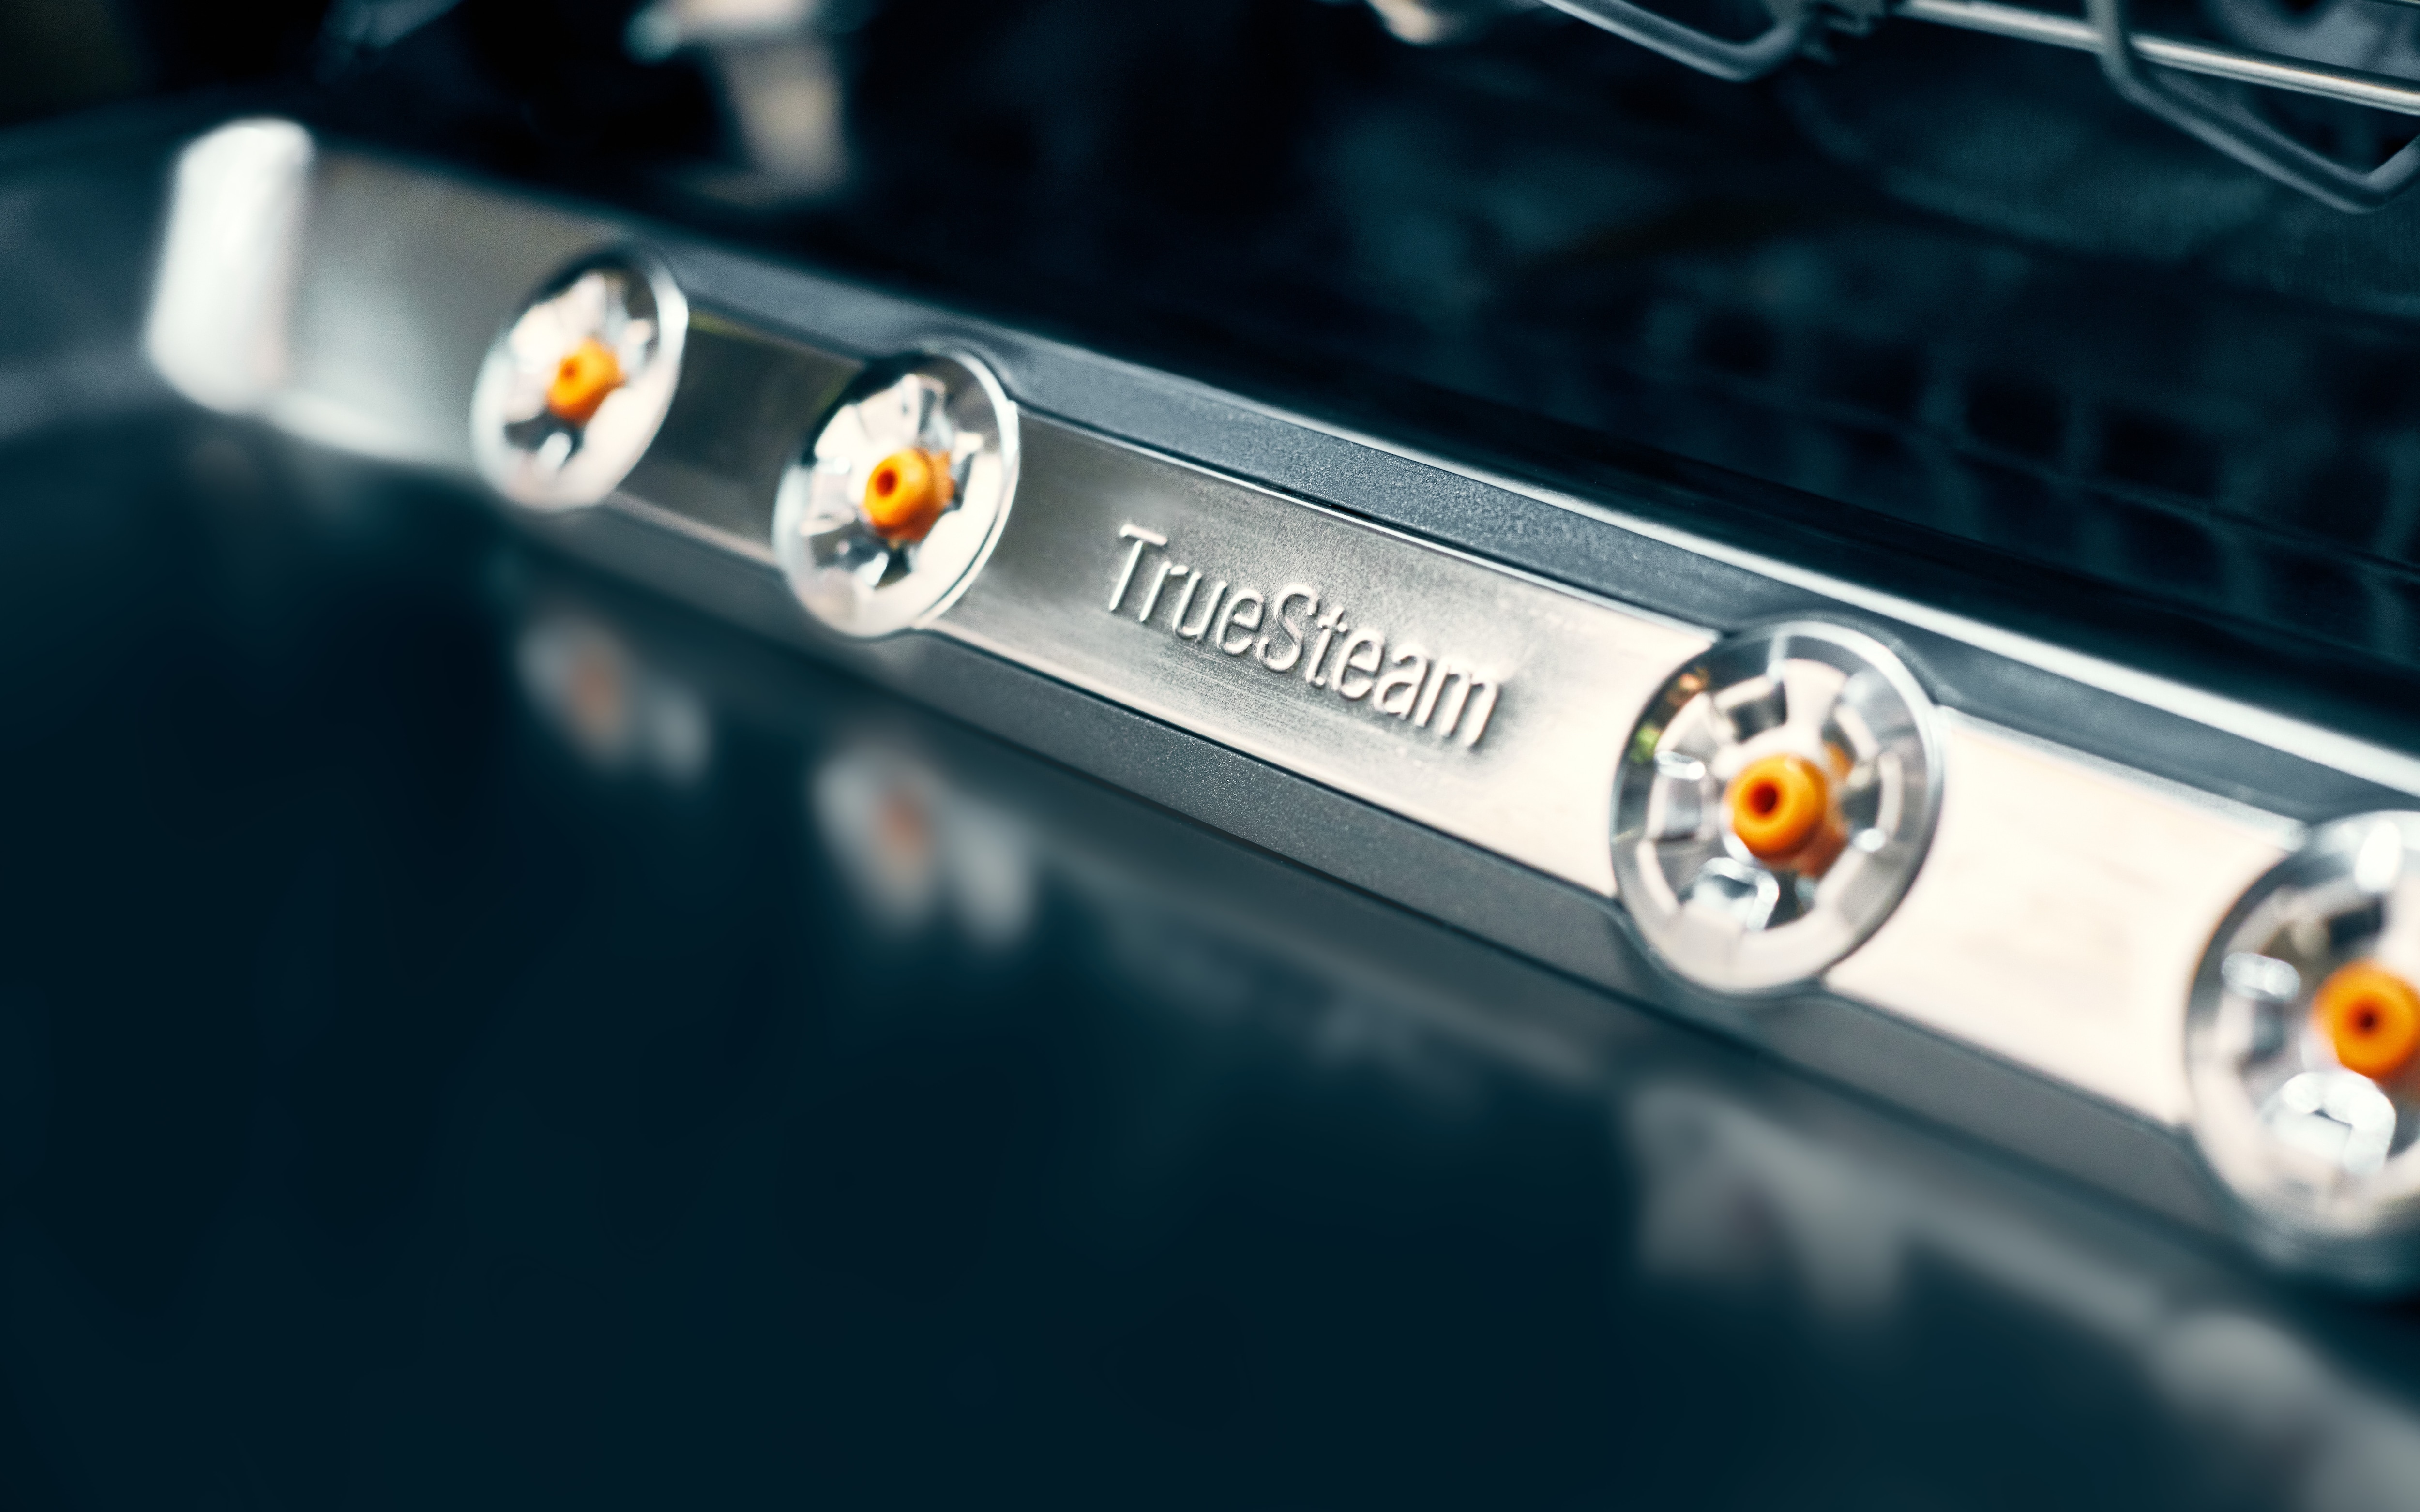 LG TrueSteam Dishwasher